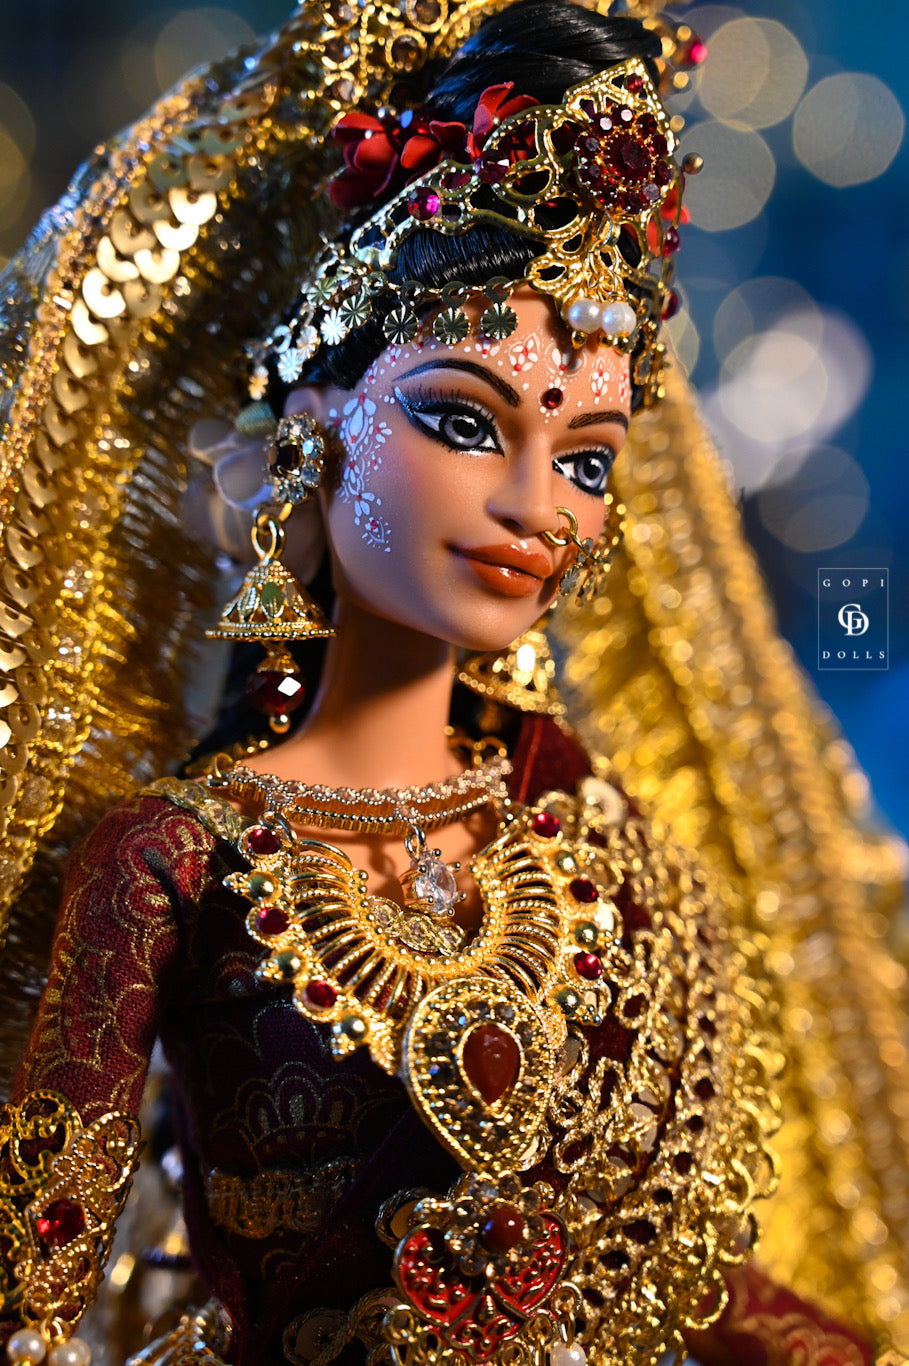 Queen Kaushalya | Gopi Doll